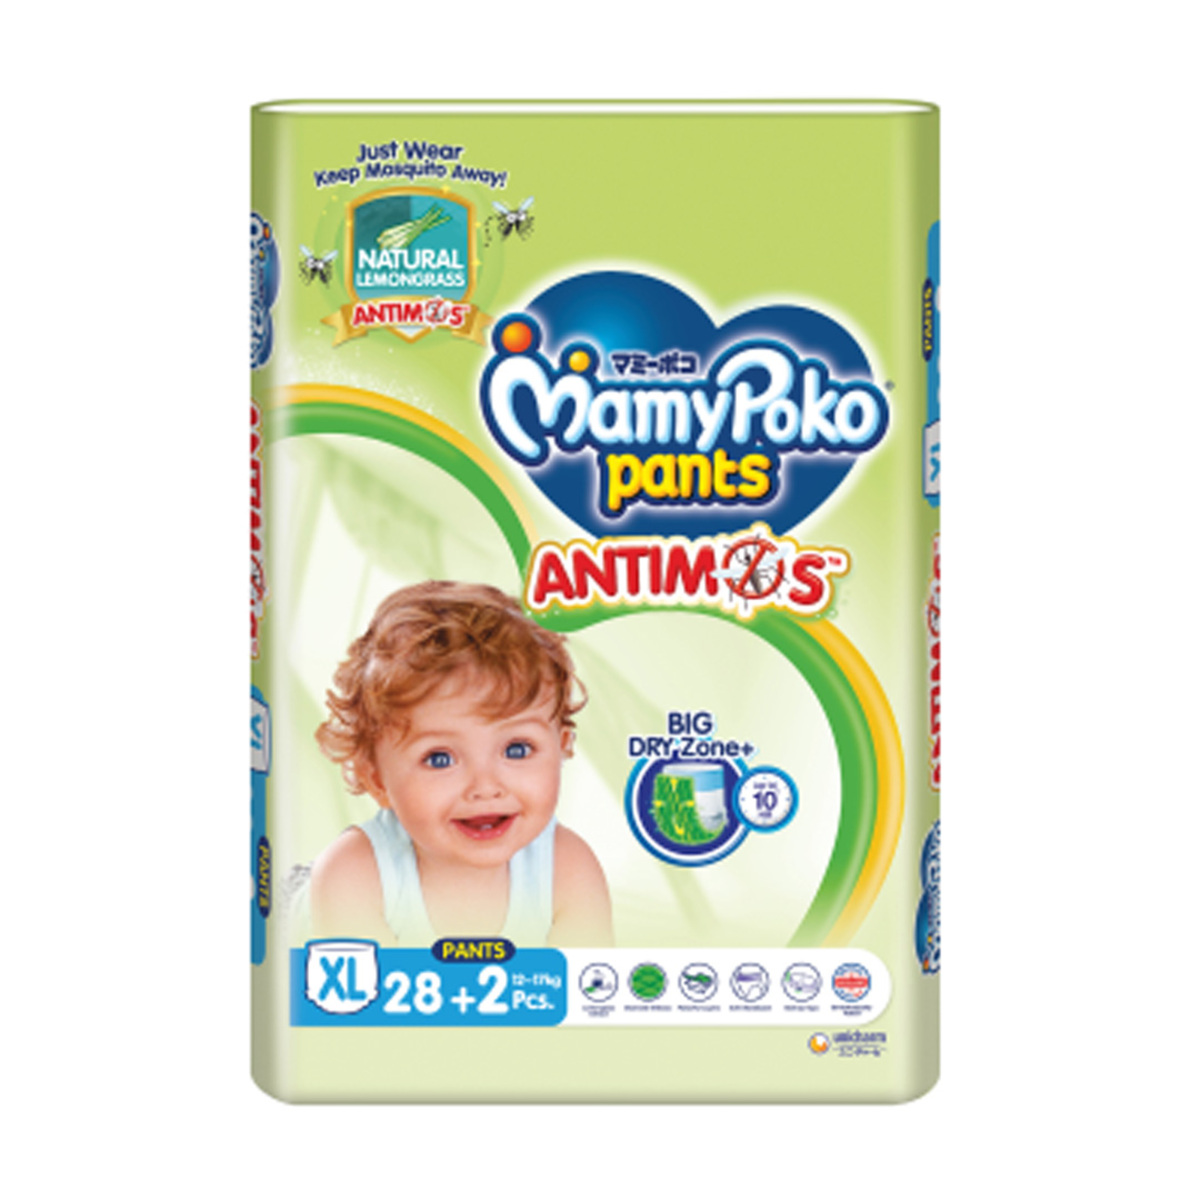 Mamy Poko Antimos Pants XL 28+2Pcs